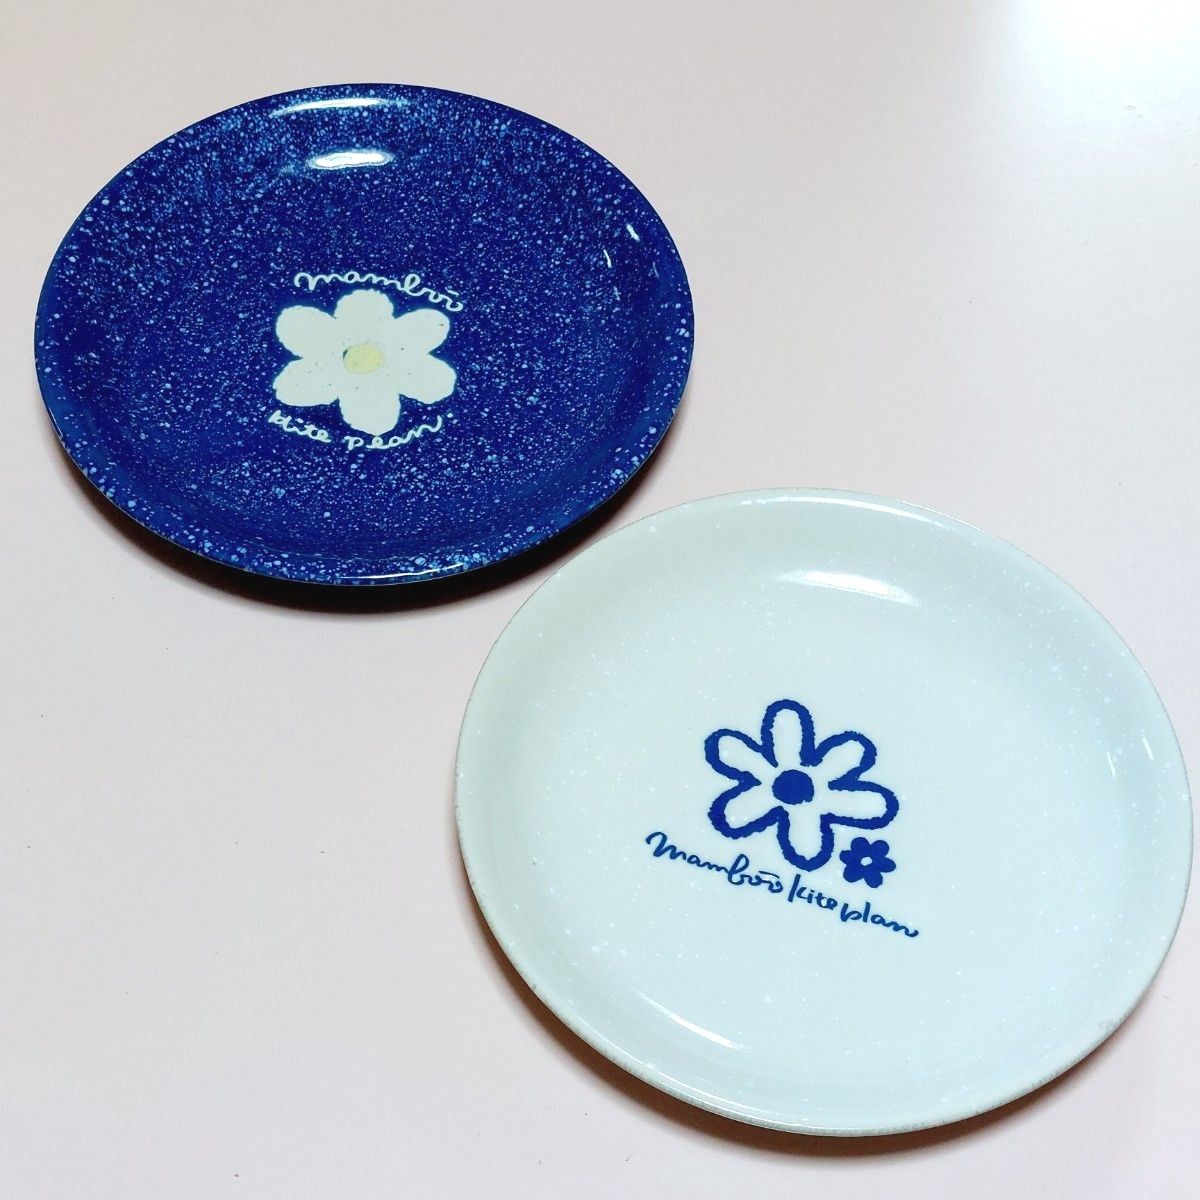 Mamboo kite plan お花の絵皿 プレート 平皿 中皿 オフホワイト／ブルー ２枚セット